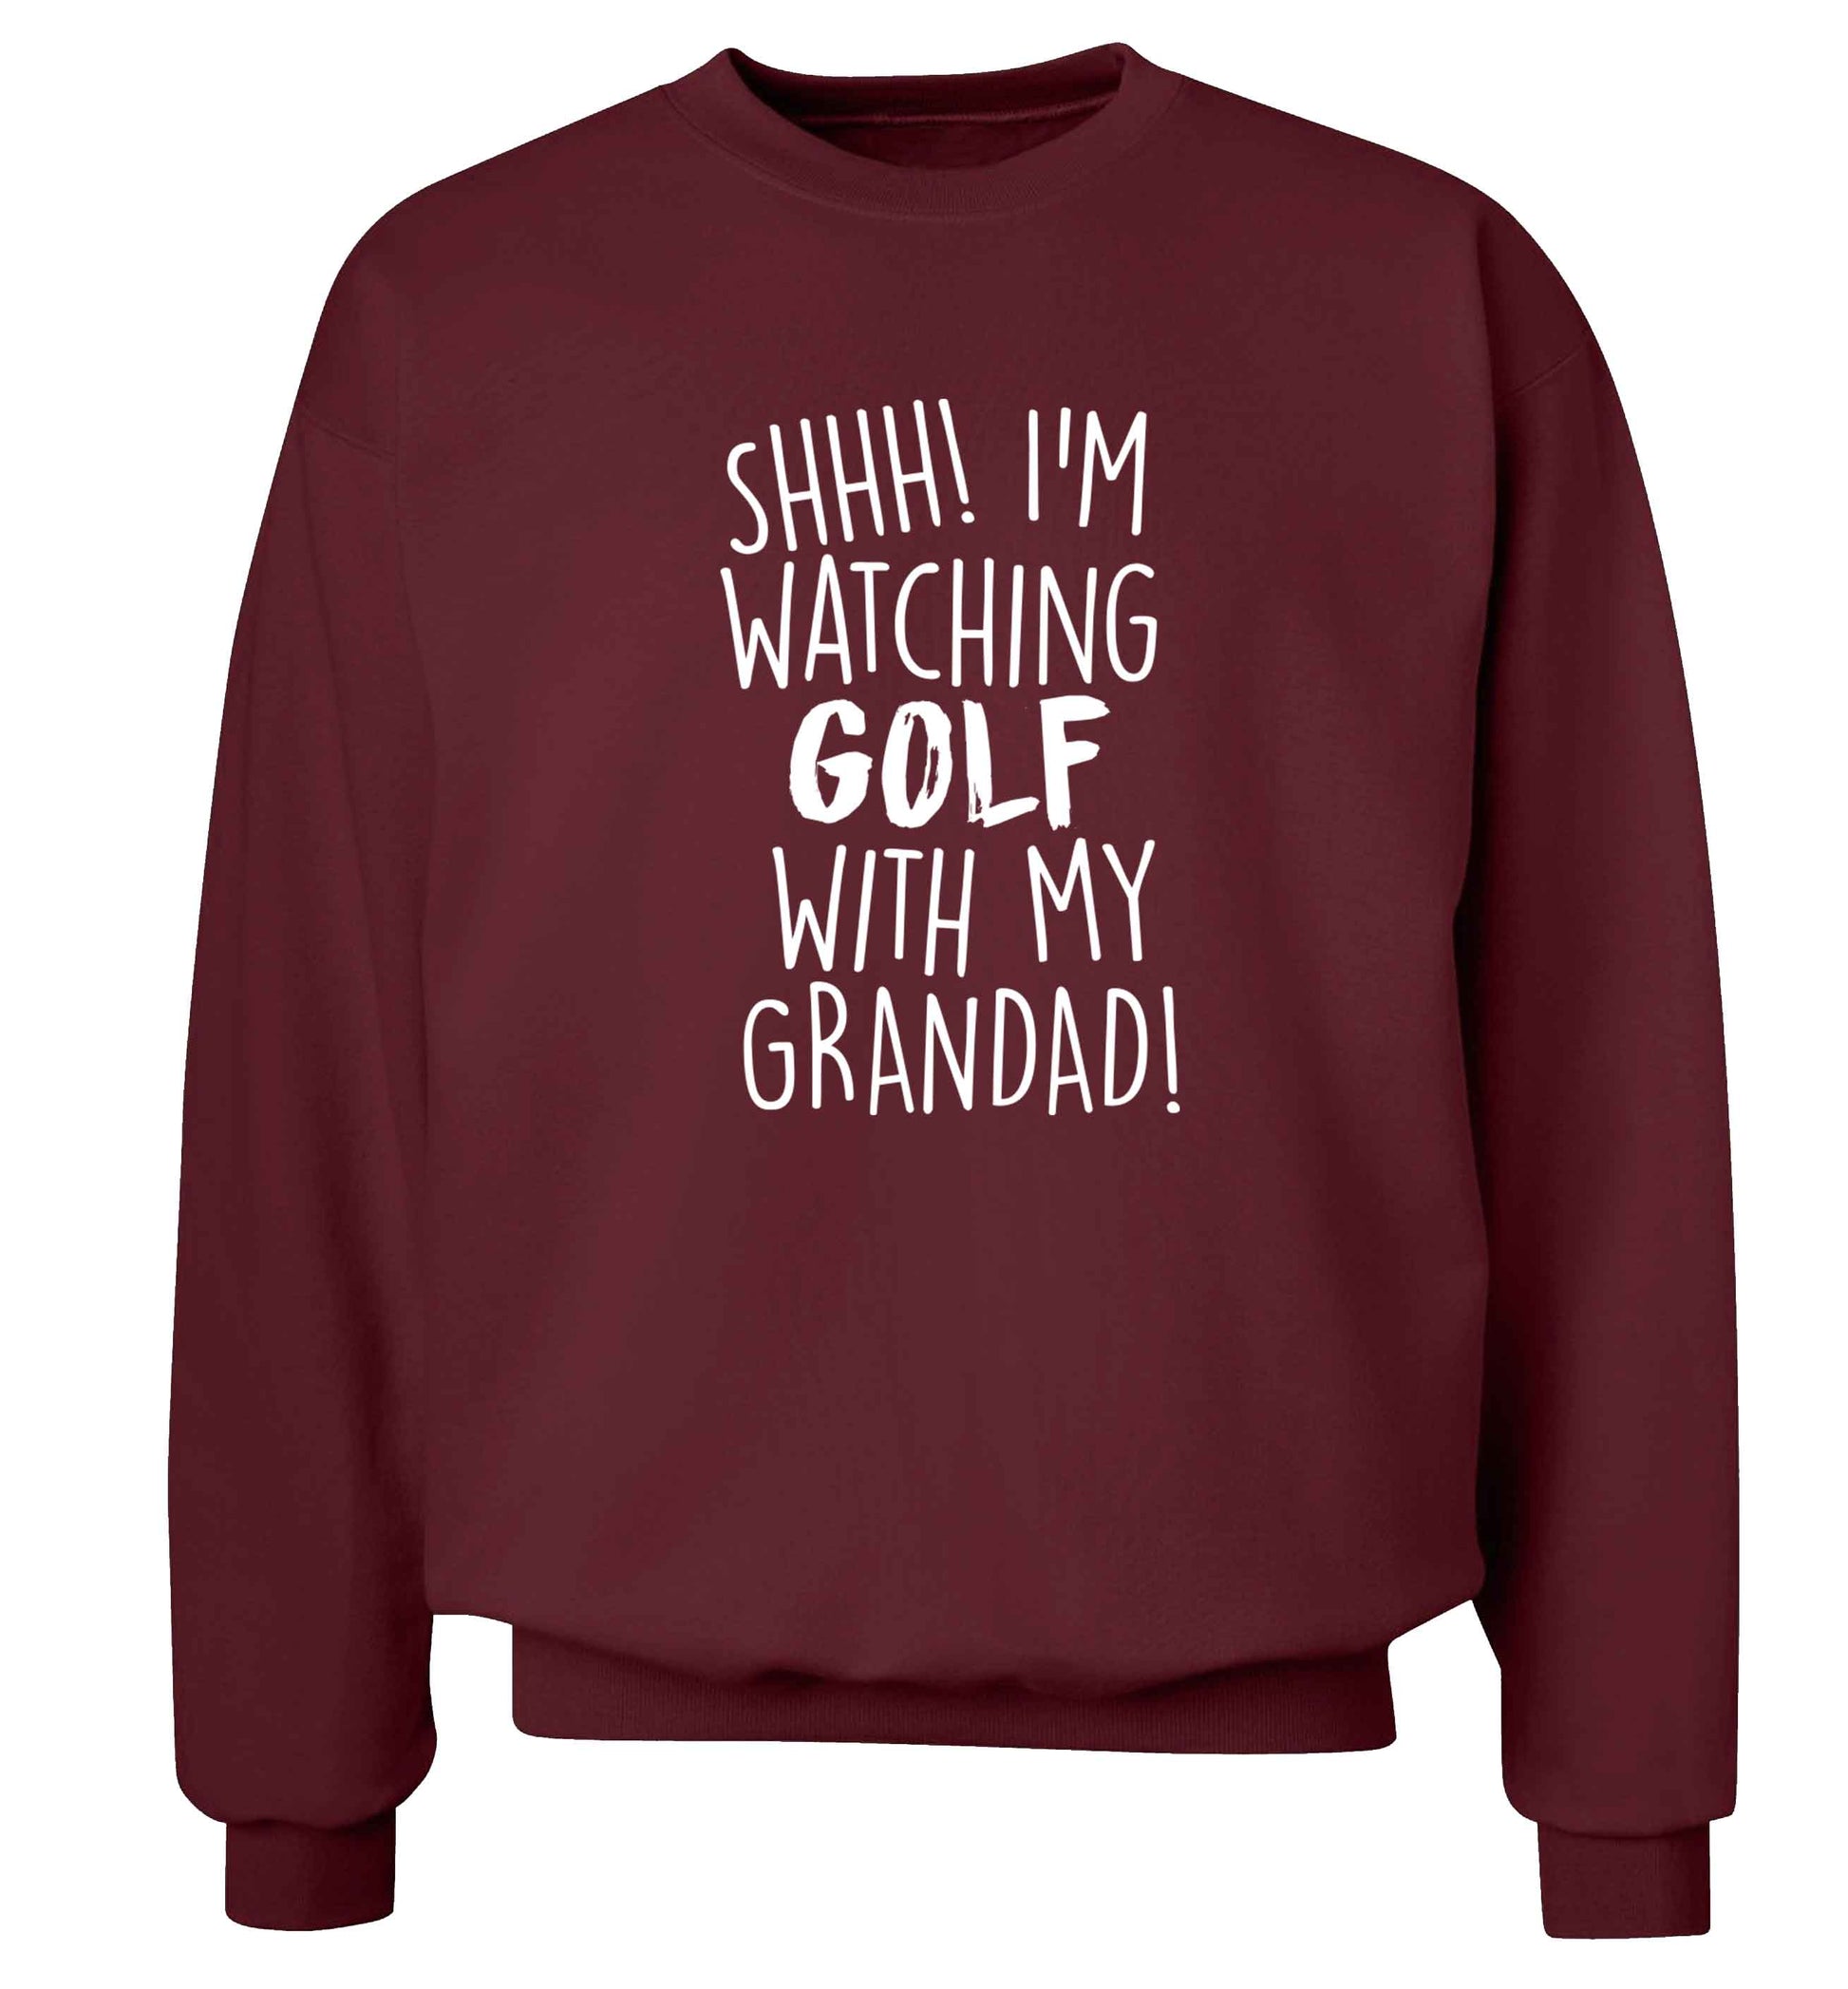 Shh I'm watching golf with my grandad Adult's unisex maroon Sweater 2XL